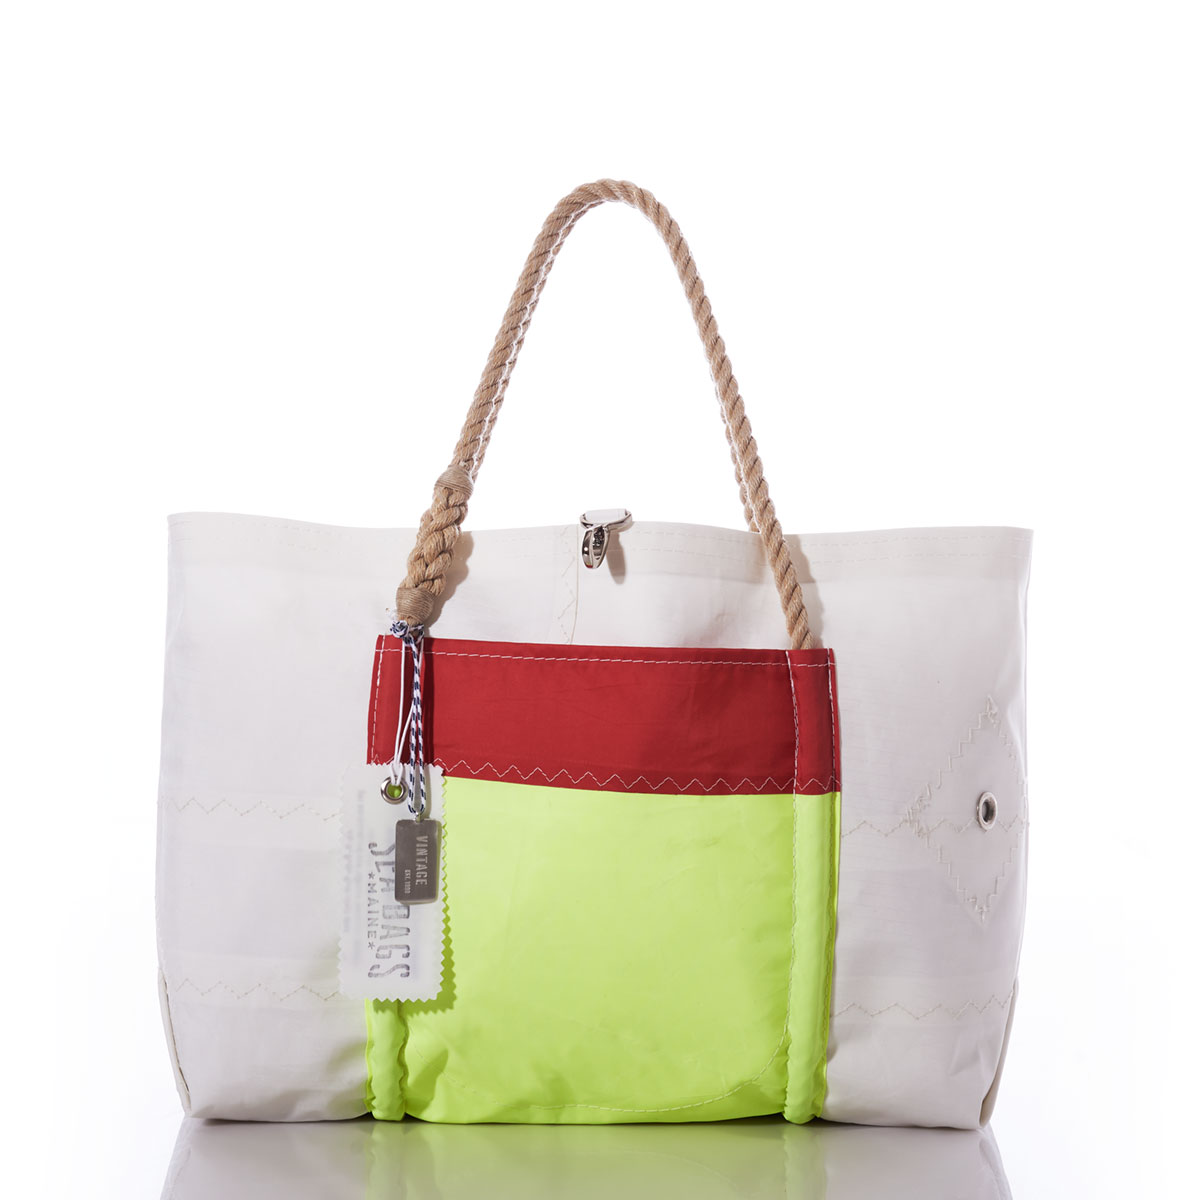 Women's Handbags & Purses for sale in Burlington, Ontario